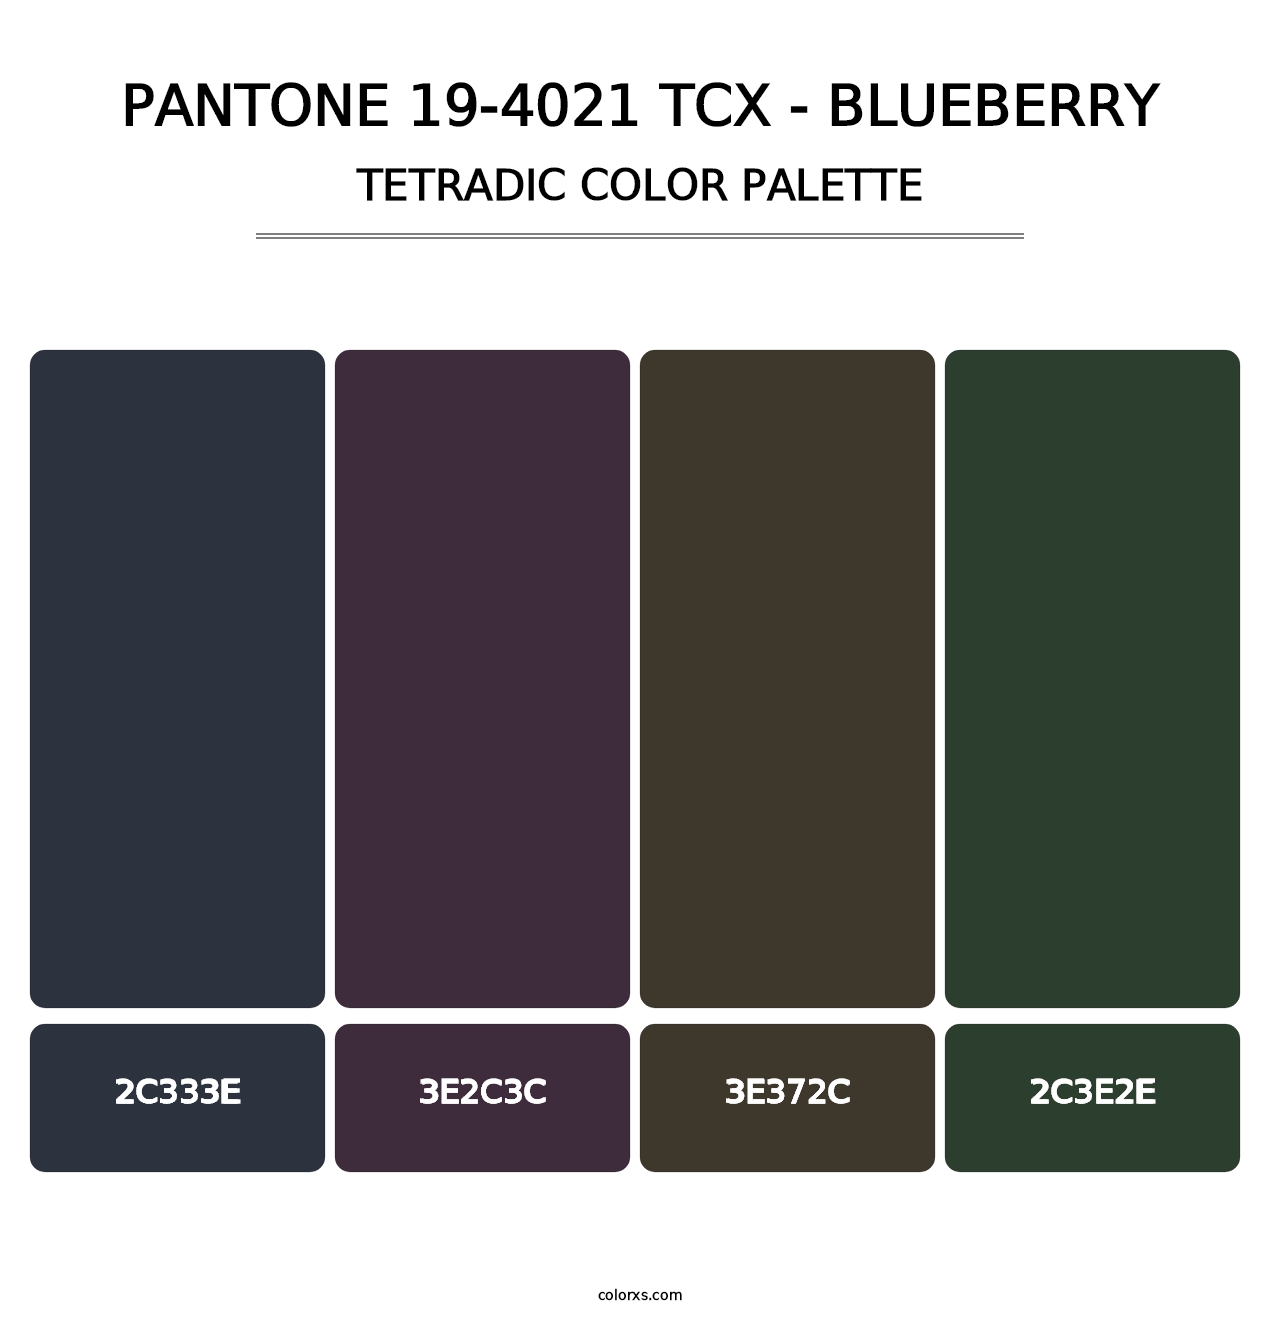 PANTONE 19-4021 TCX - Blueberry - Tetradic Color Palette